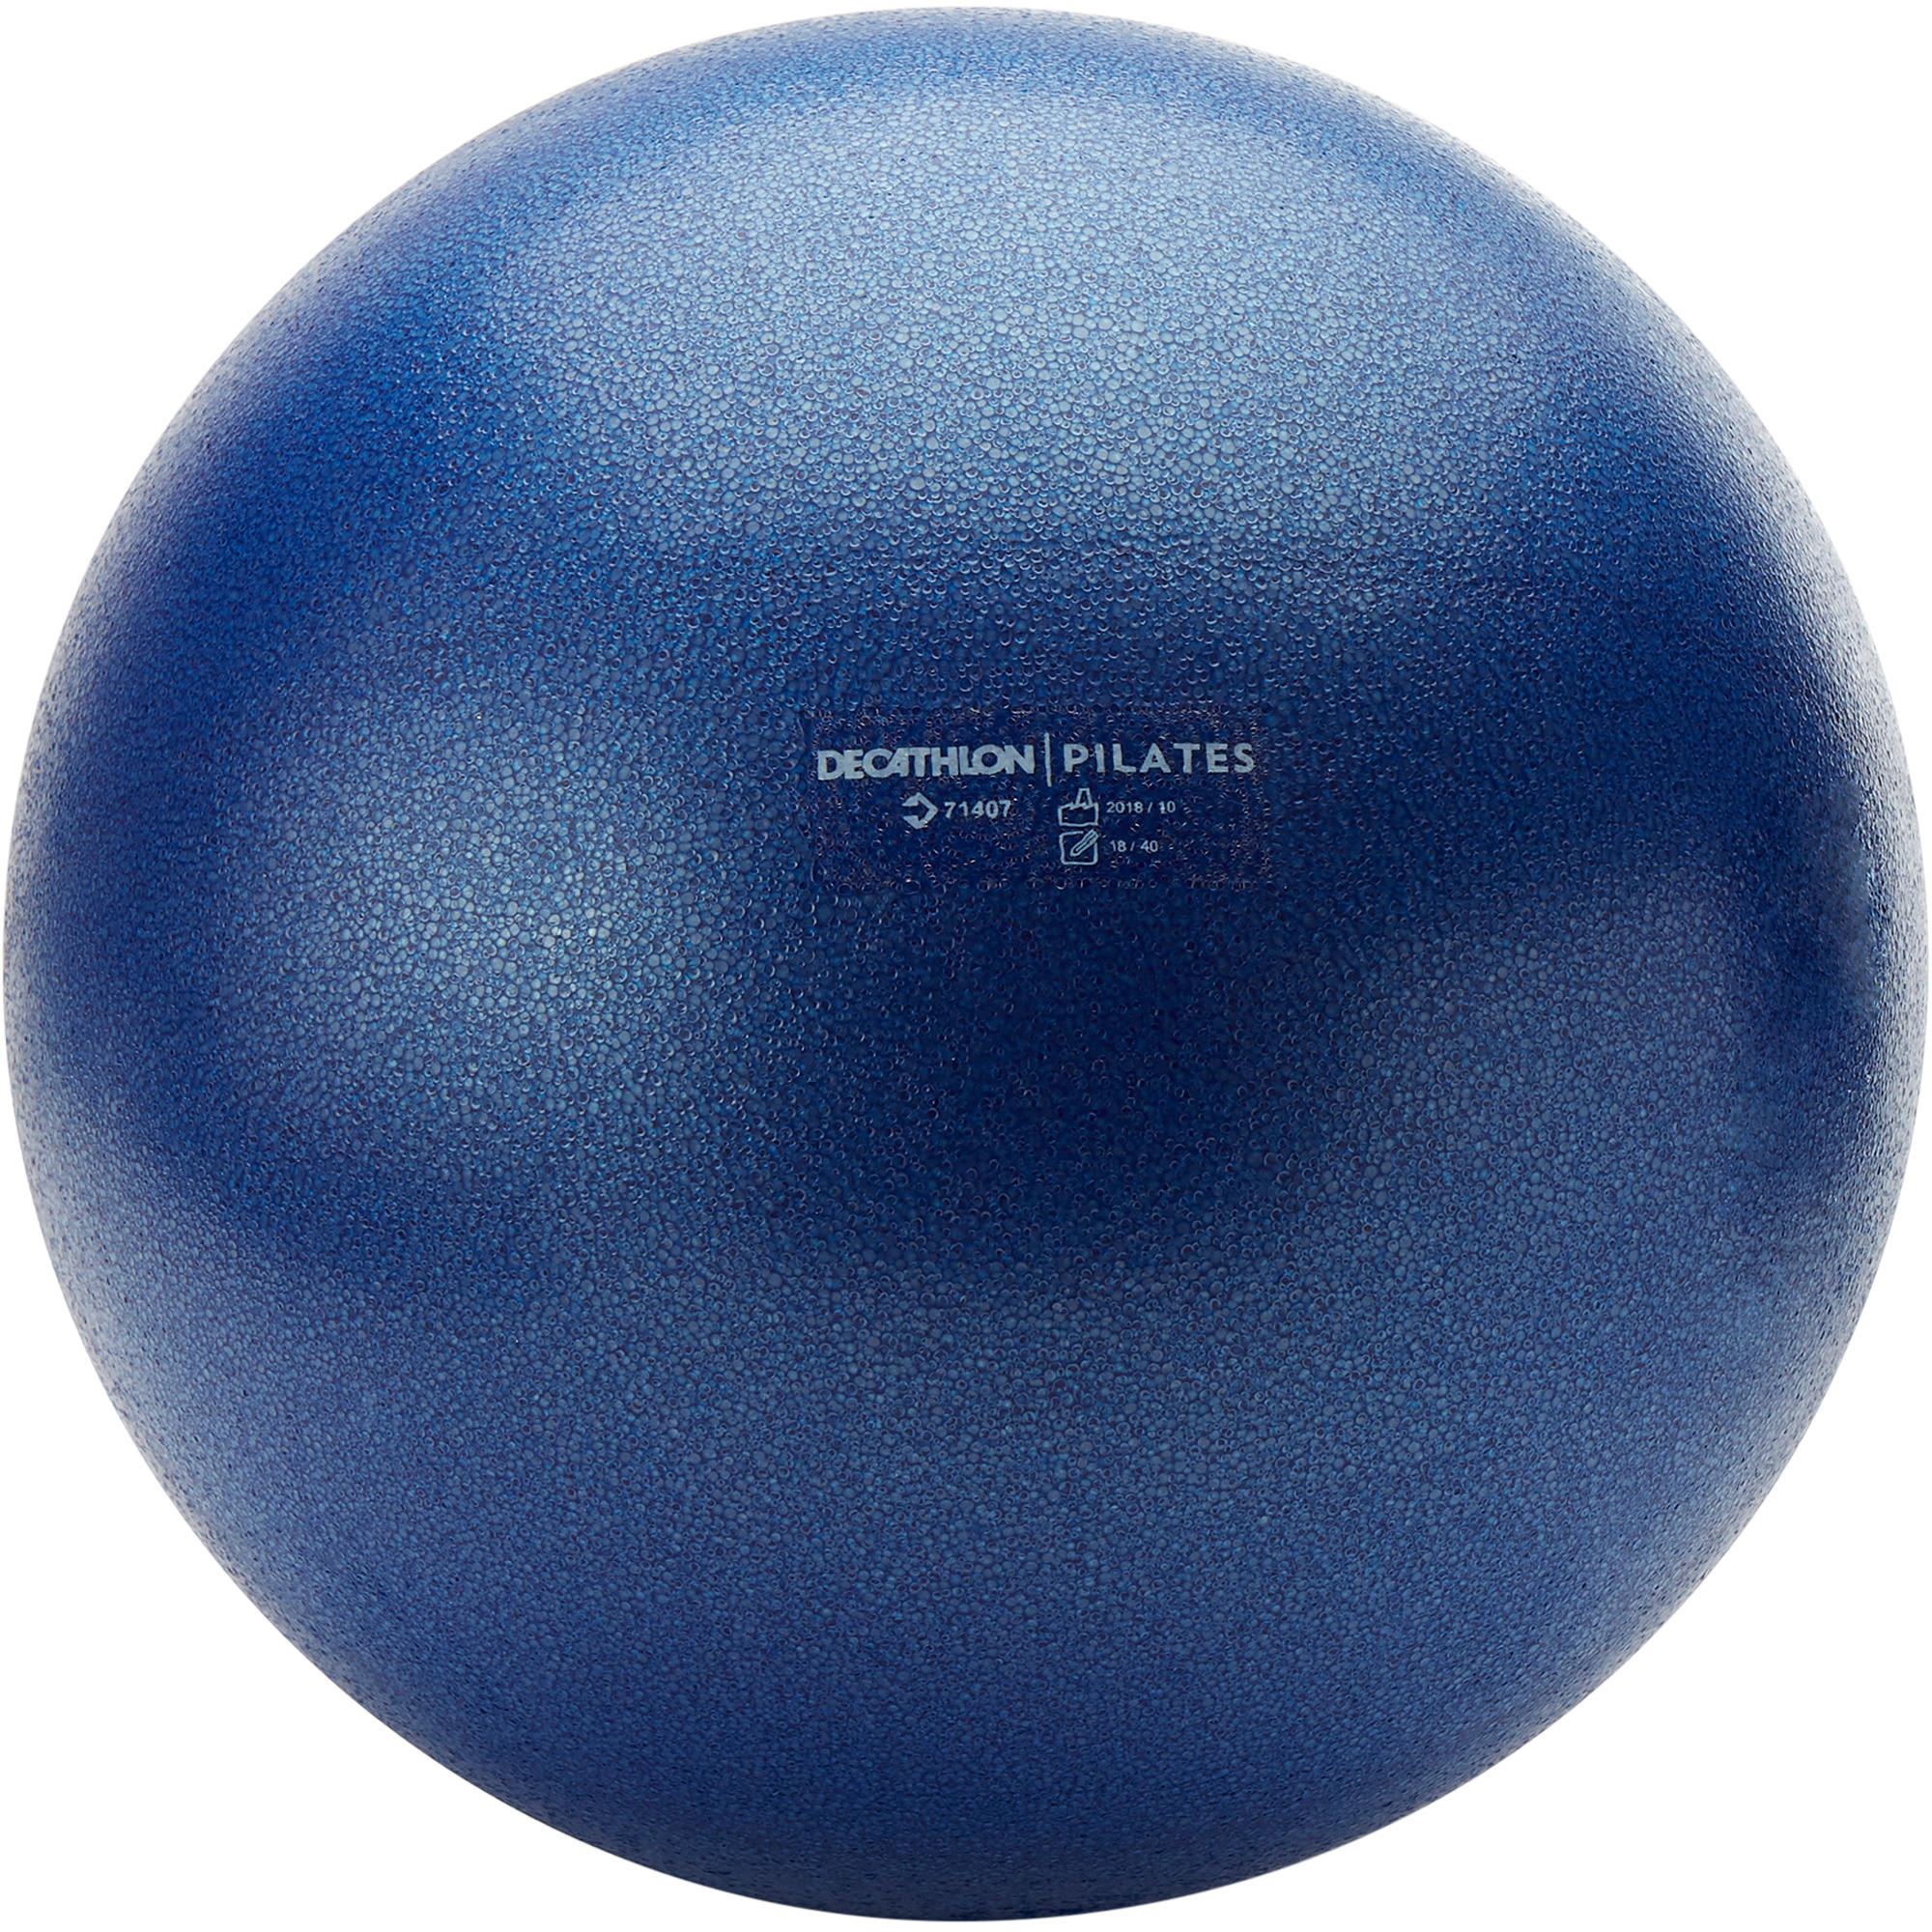 decathlon pilates soft ball